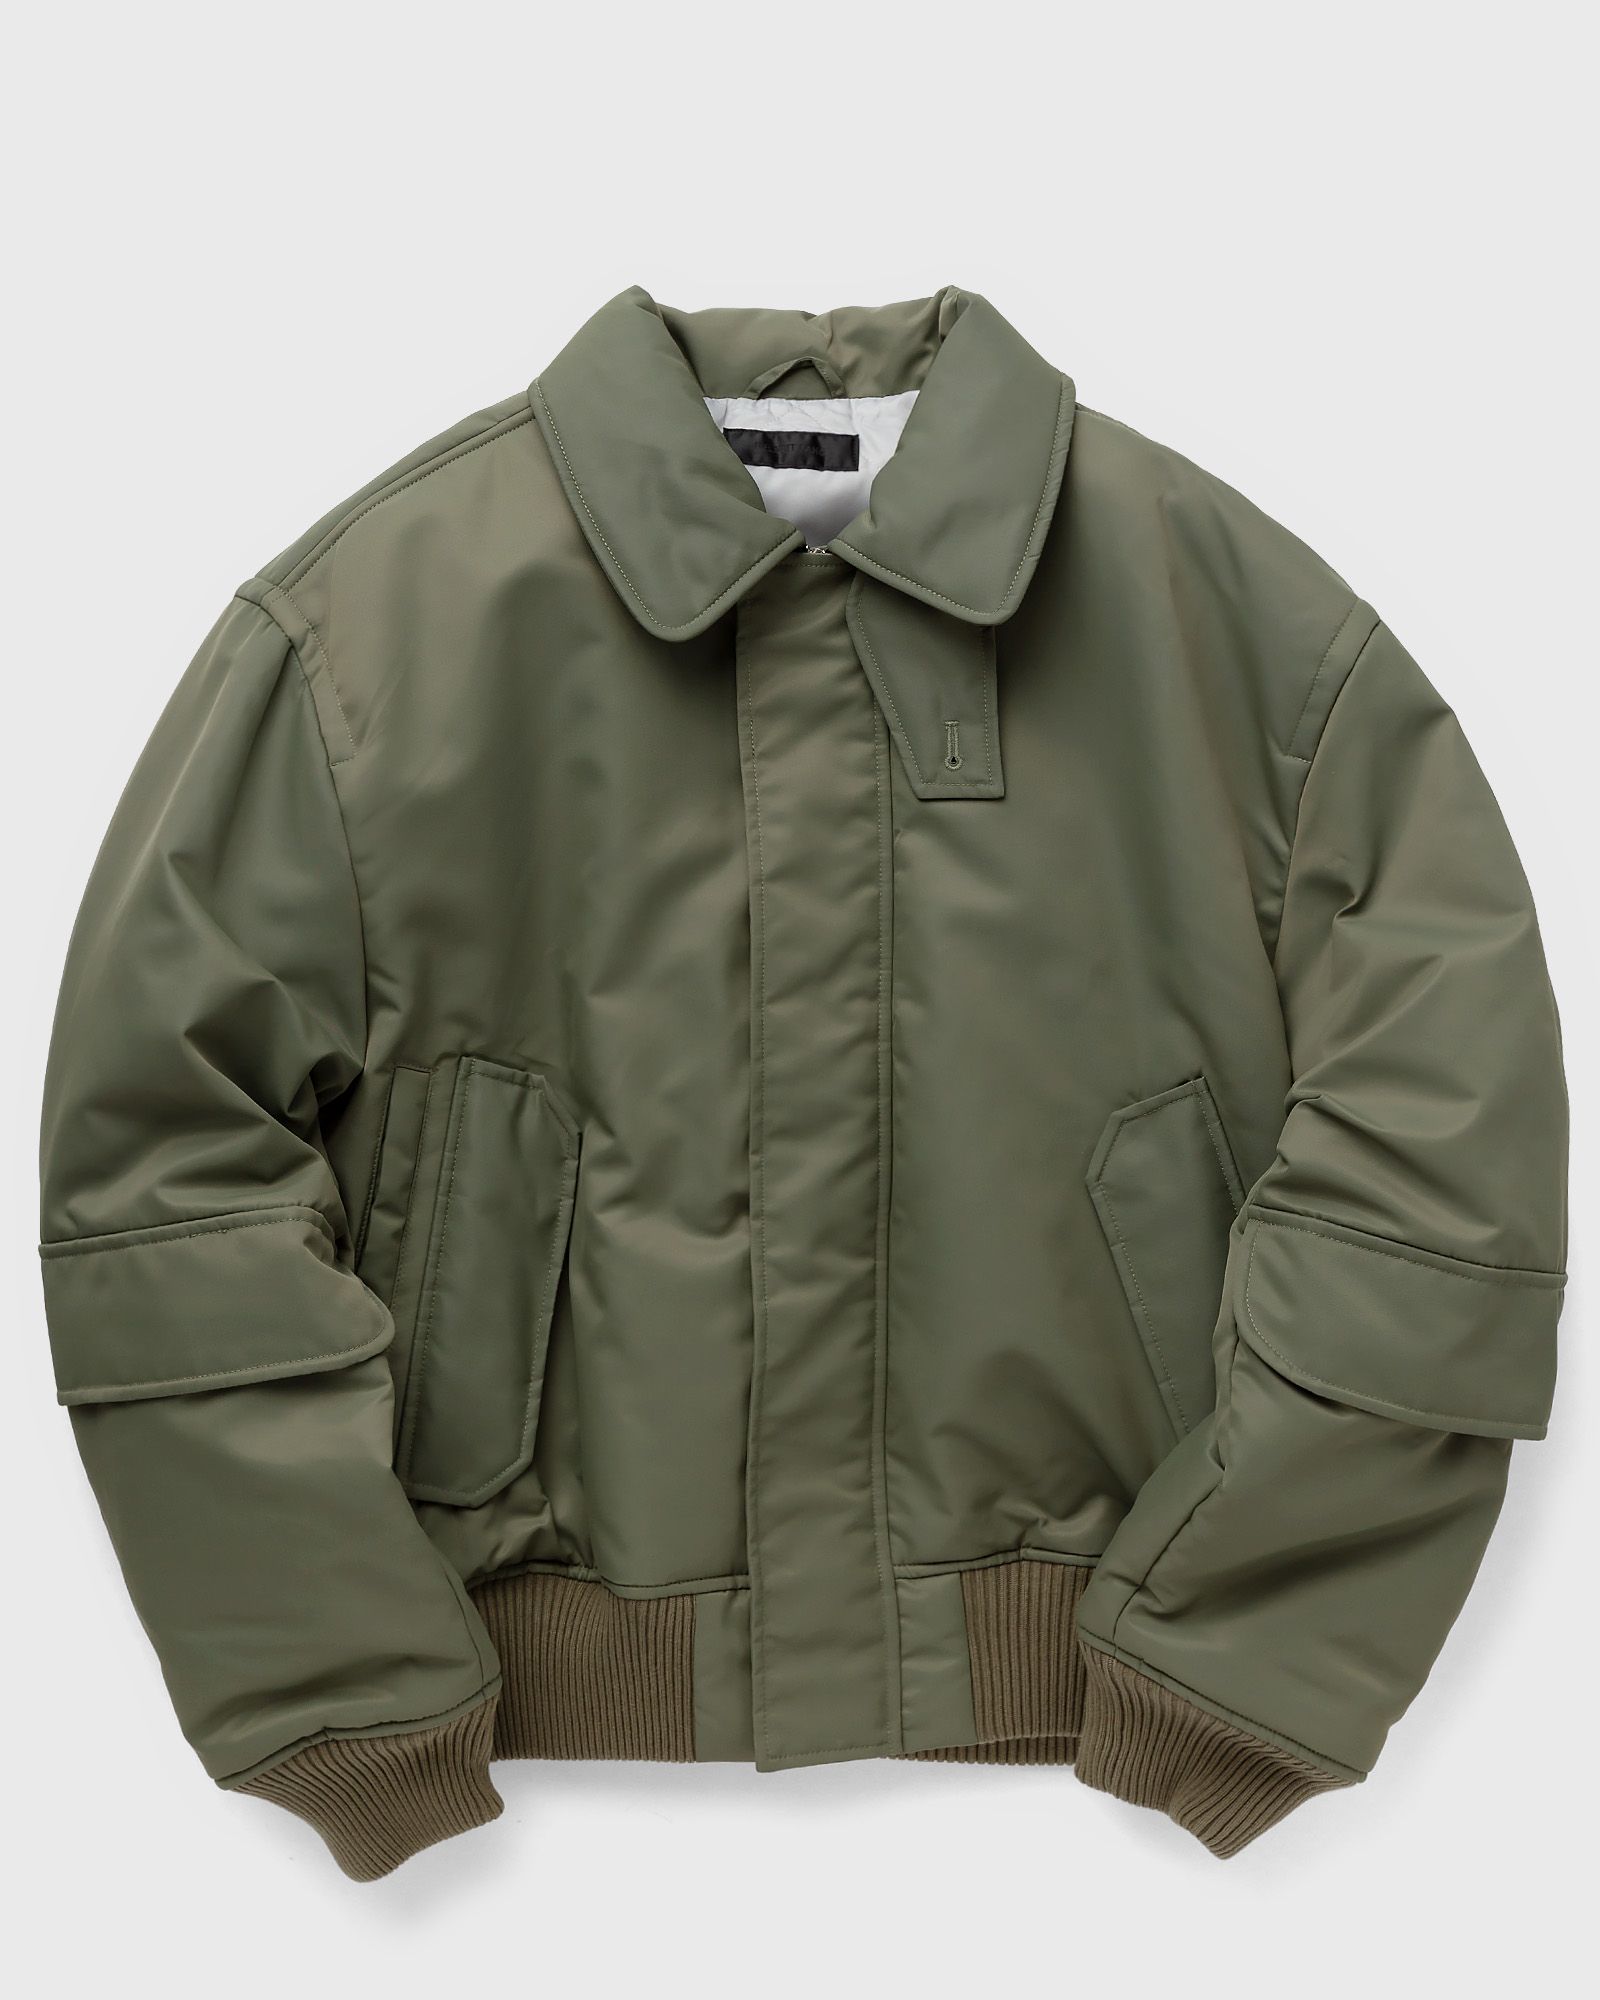 Helmut Lang - flight jacket1 men bomber jackets green in größe:m